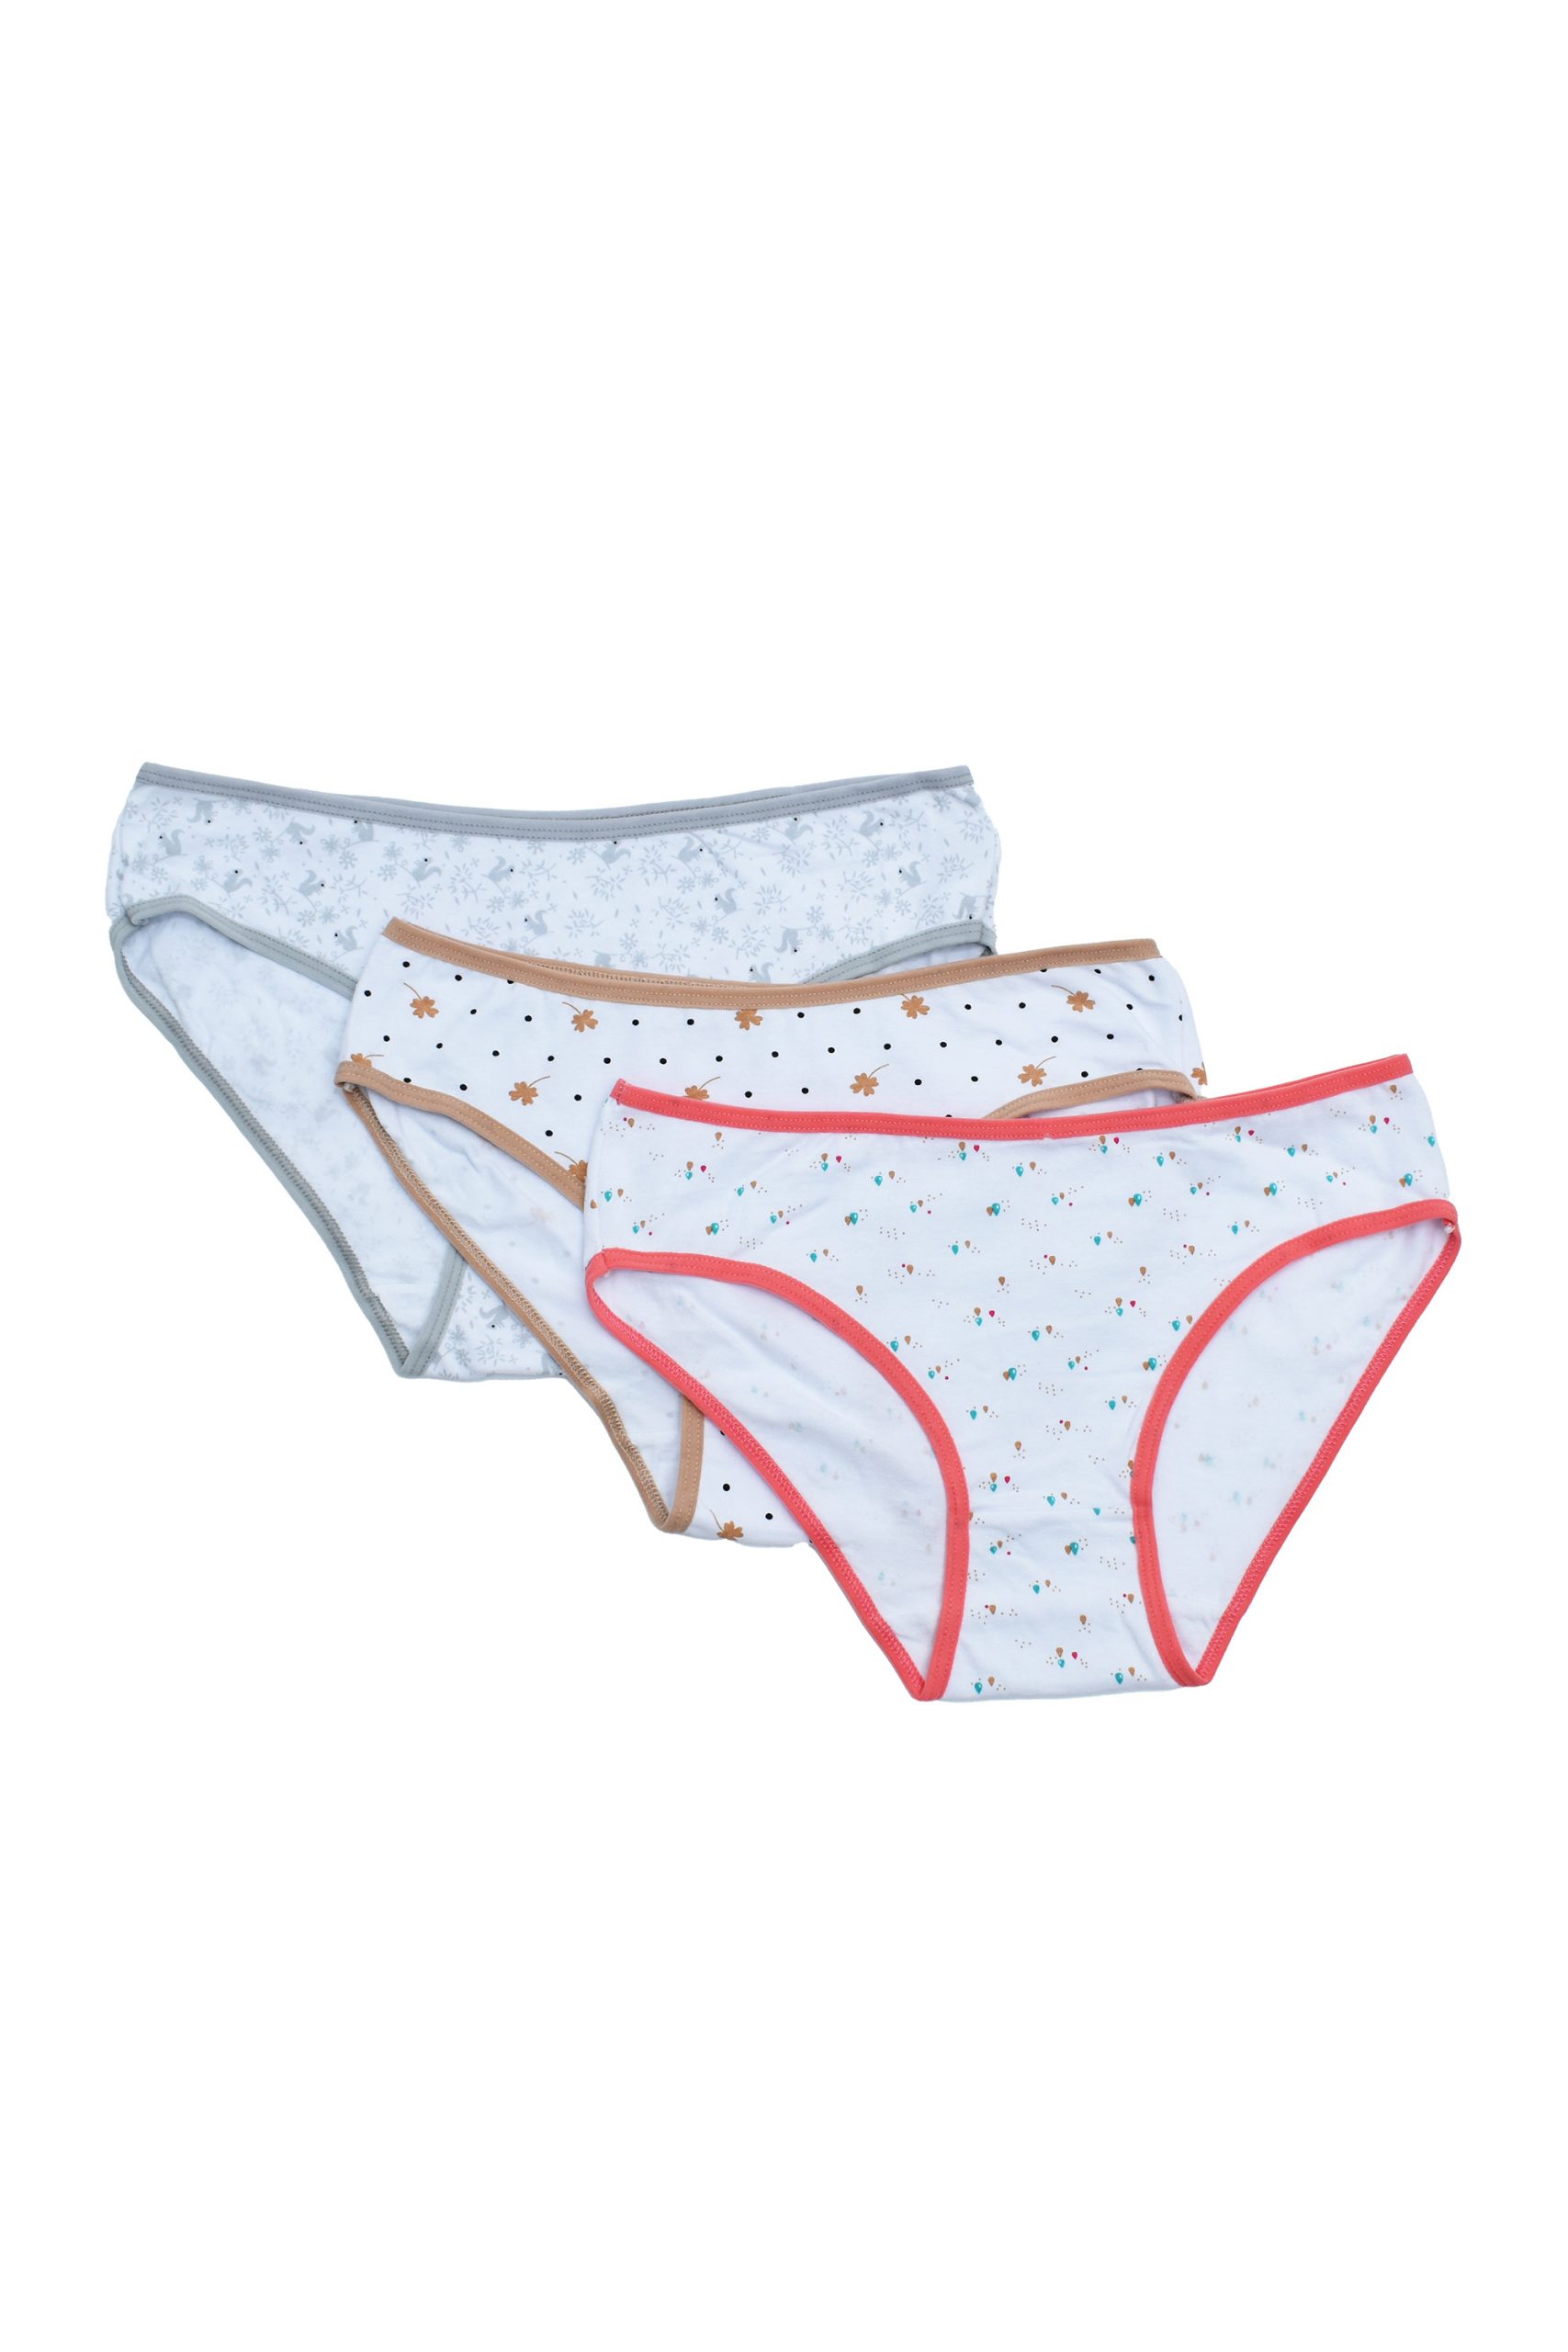 B&C Midi / Bikini Printed Cotton Panty 3 pack - Size S-L (A195) - B & C ...